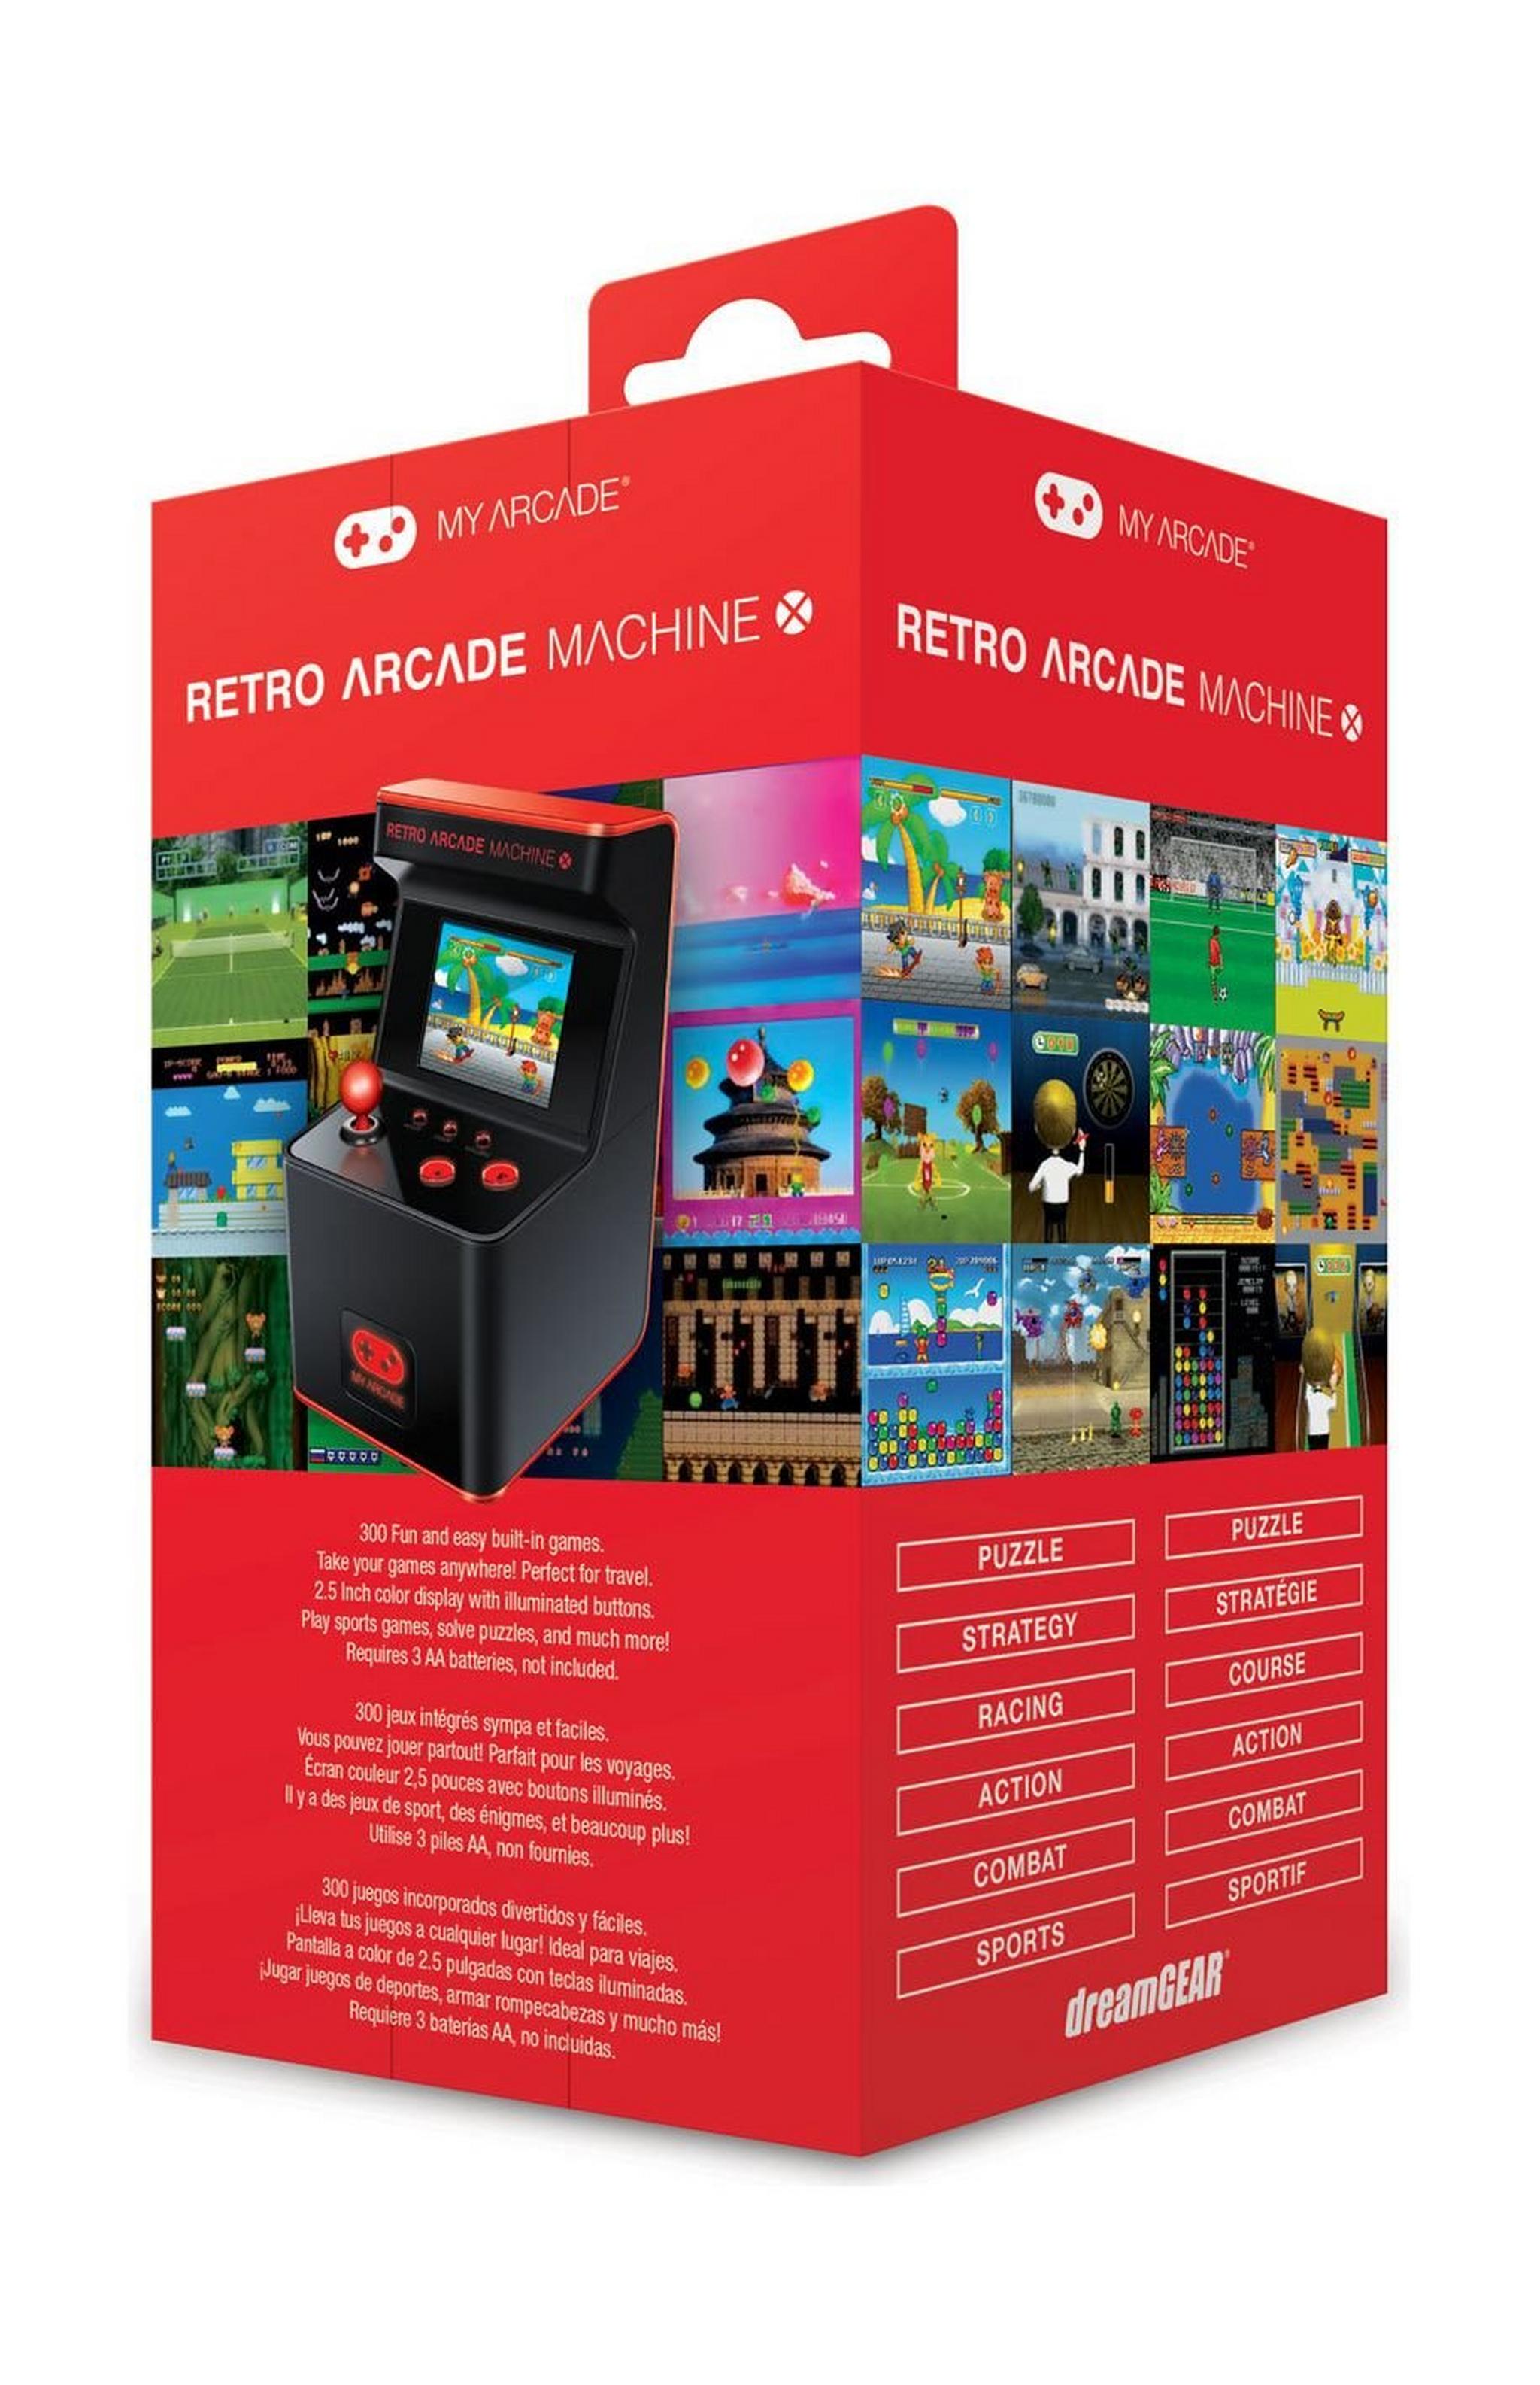 Dream Gear Retro Arcade Machine X Gaming System with 300 Games (DGUN-2593)